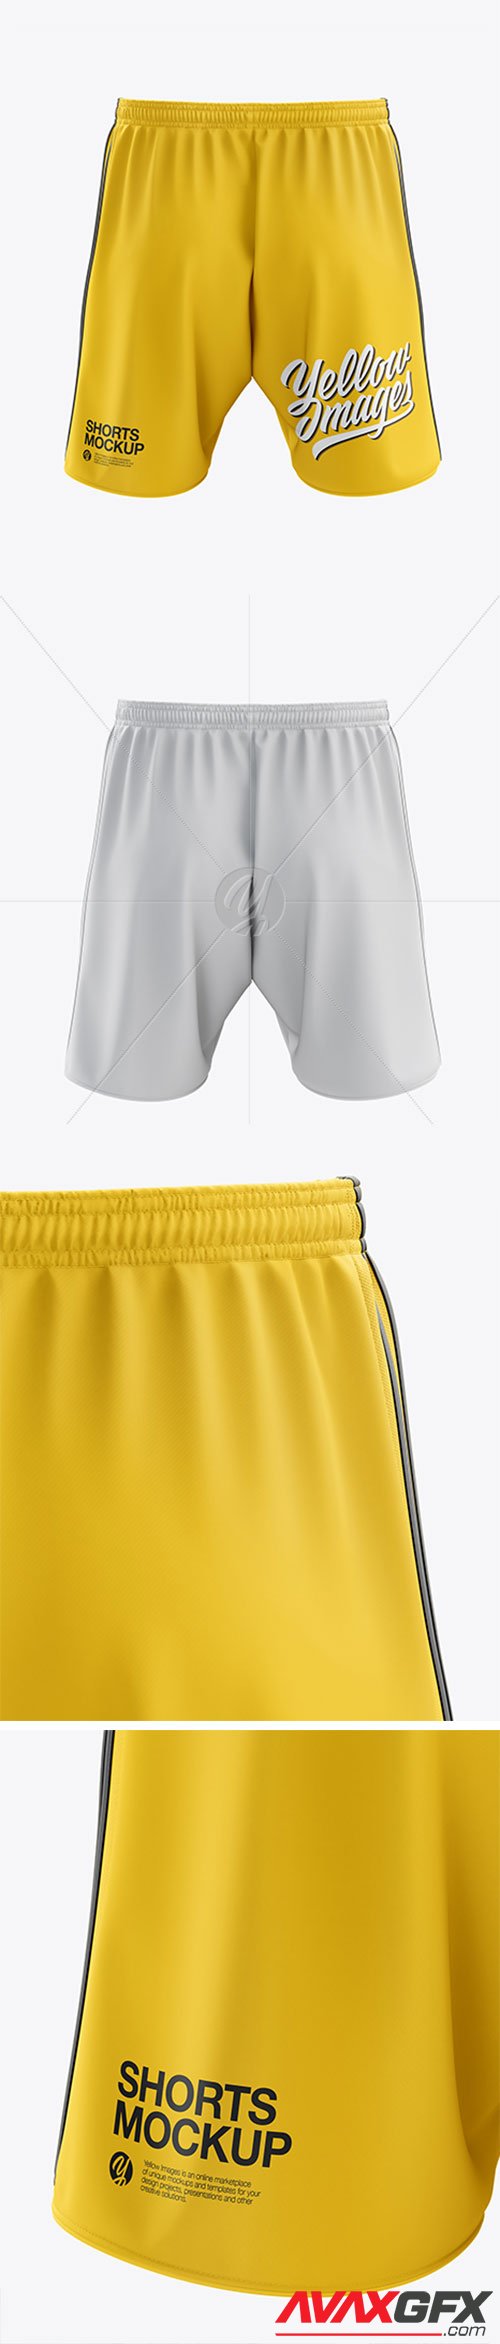 Men's Soccer Shorts mockup (Back View) 38707 » AVAXGFX ...